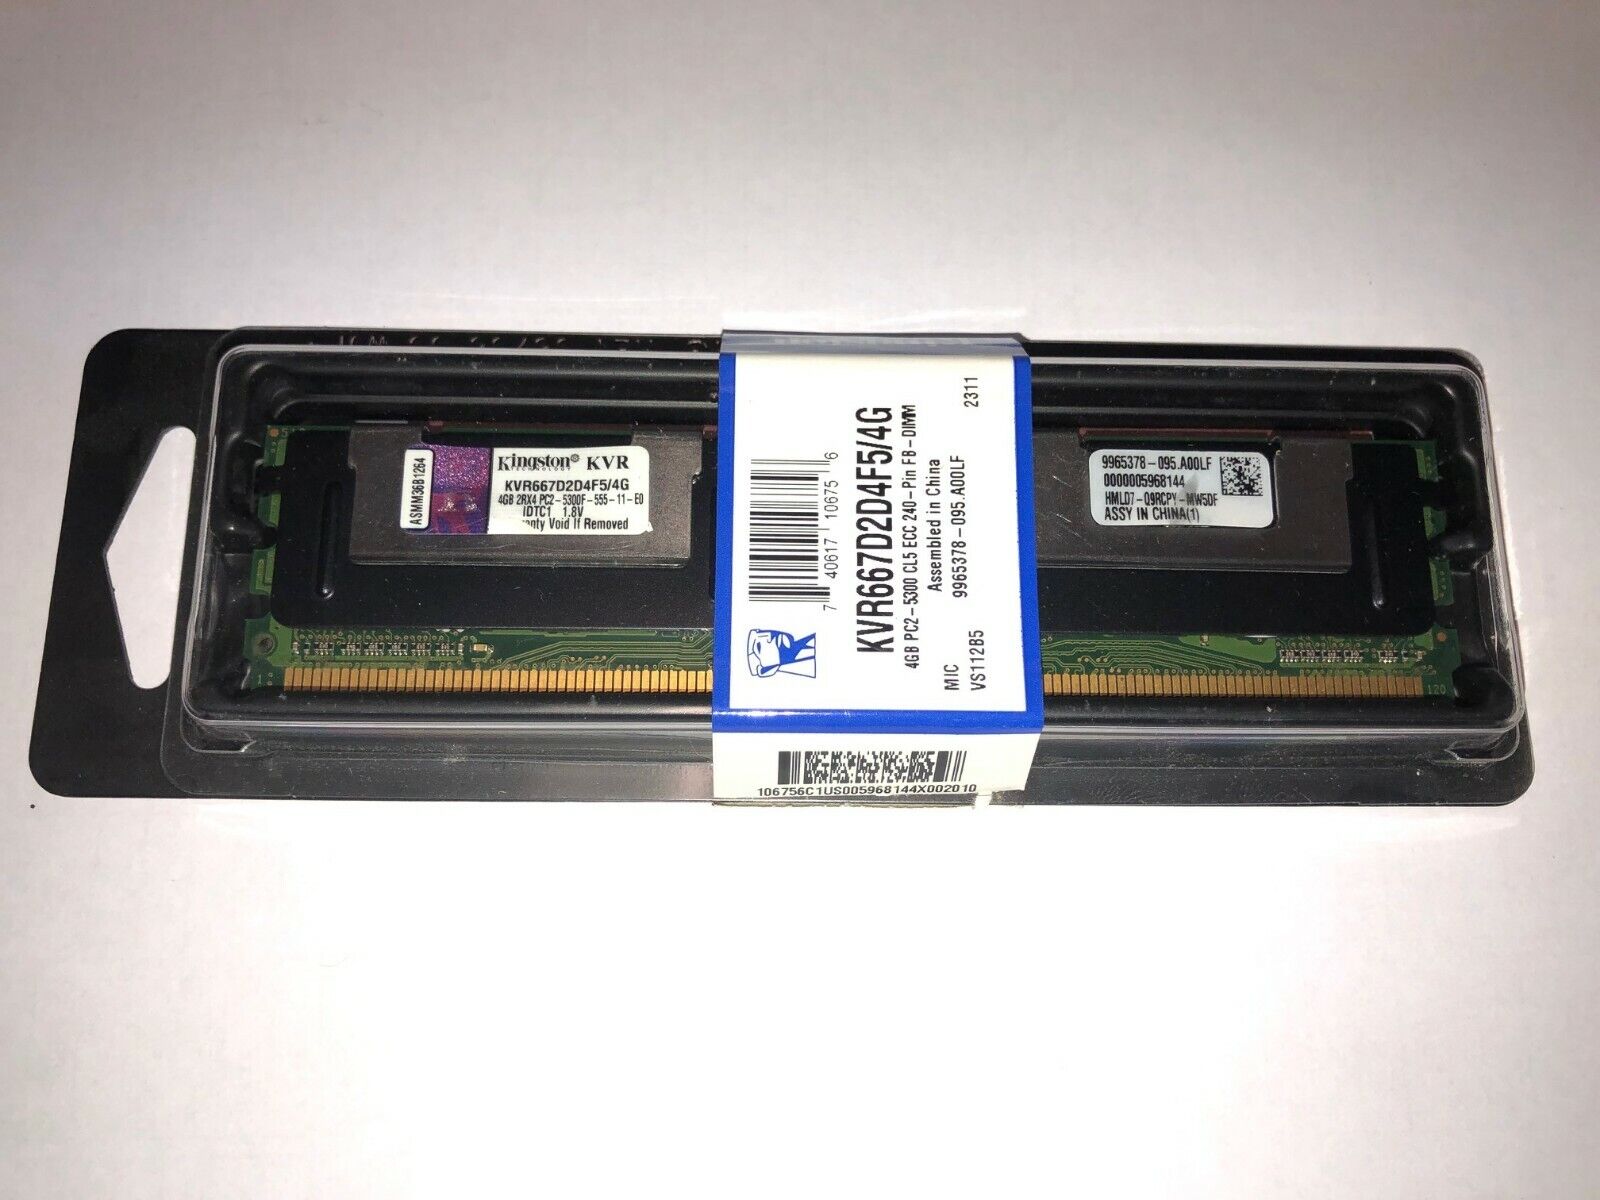 Kingston PC2 5300 4 GB DIMM 667 MHz DDR2 SDRAM Memory (KVR667D2D4F5/4G) SERVER 